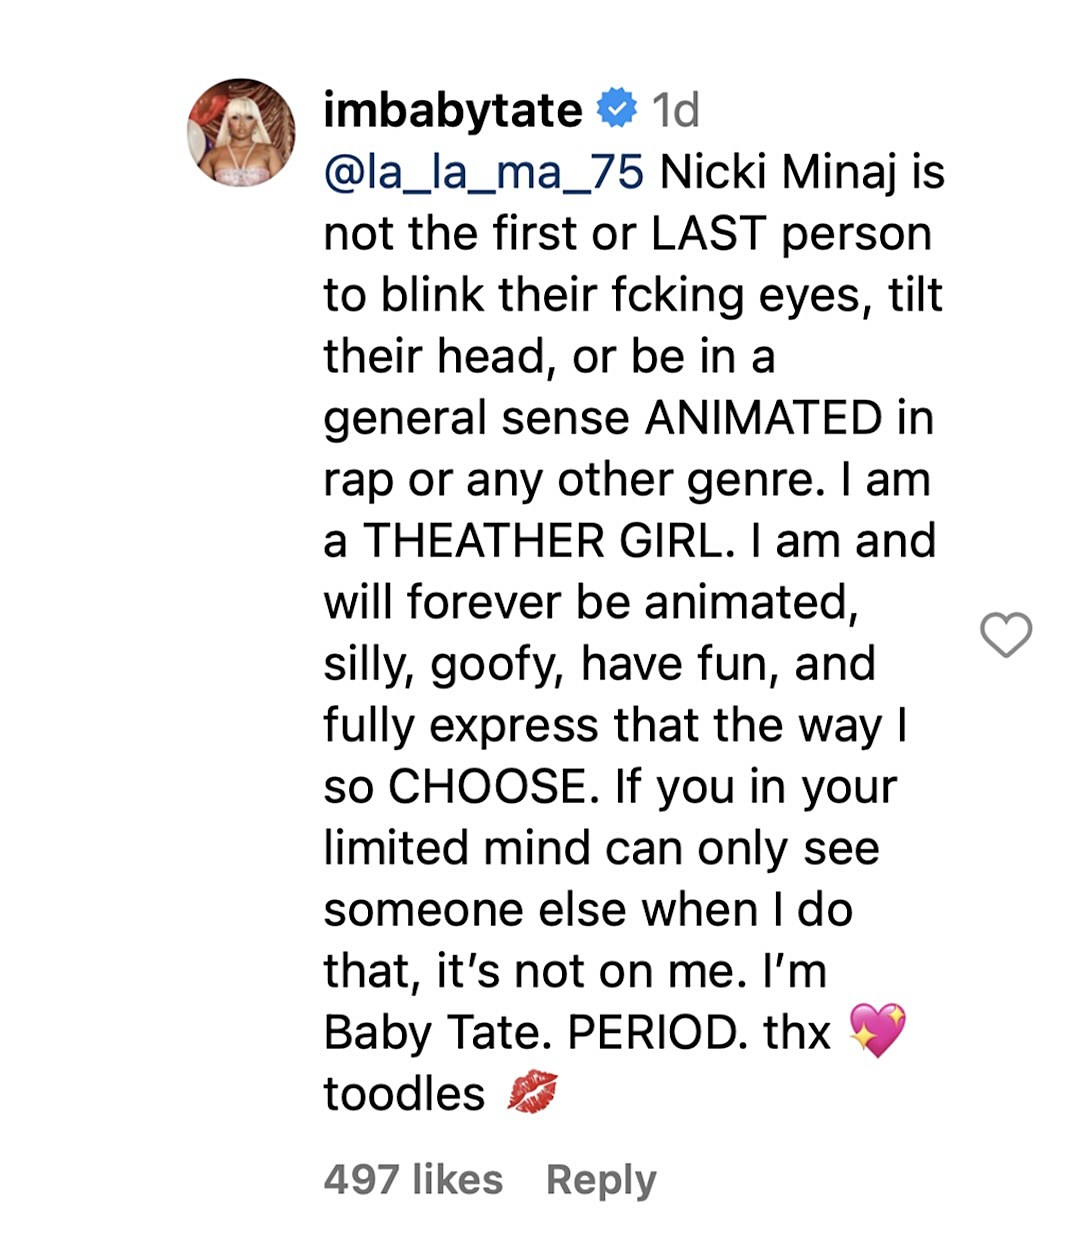 Baby Tate responds to a fan who accuses her of biting Nicki Minaj.